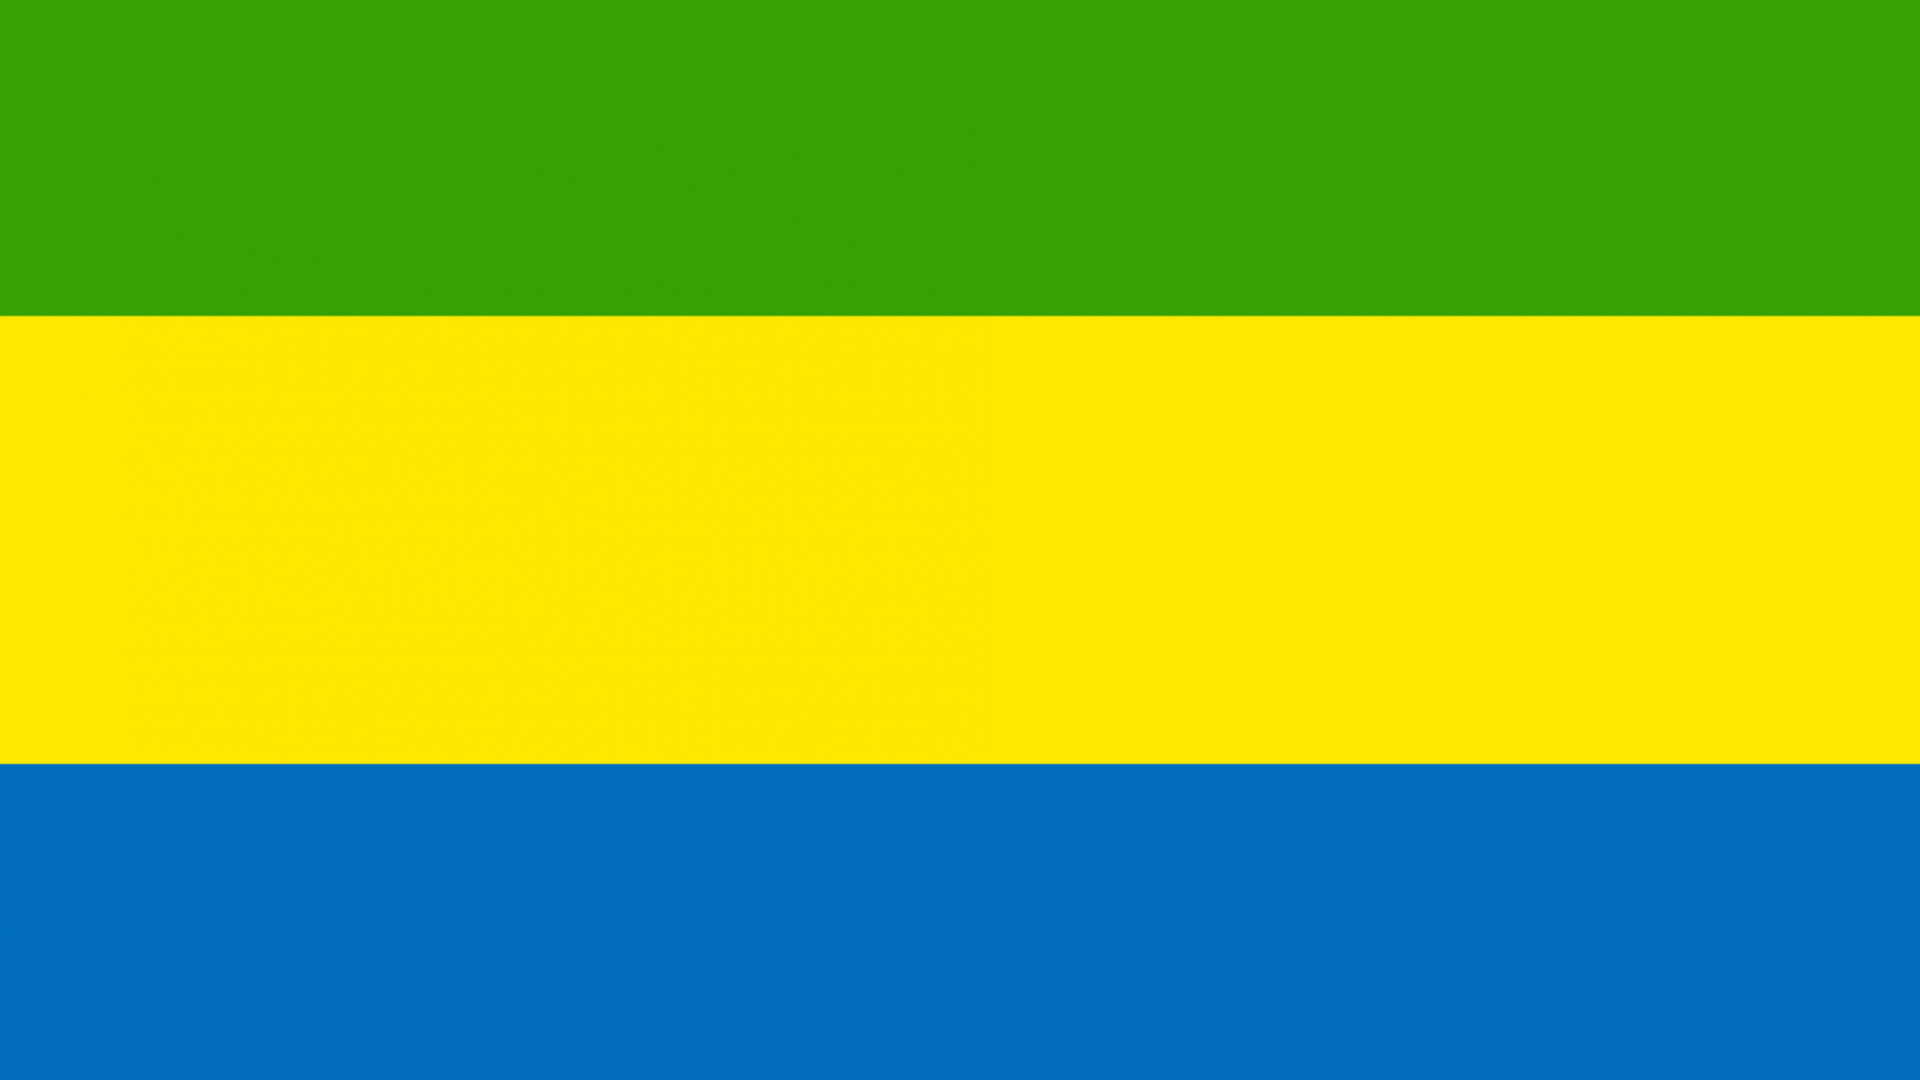 Gabon Flag, High Definition, High Quality, Widescreen